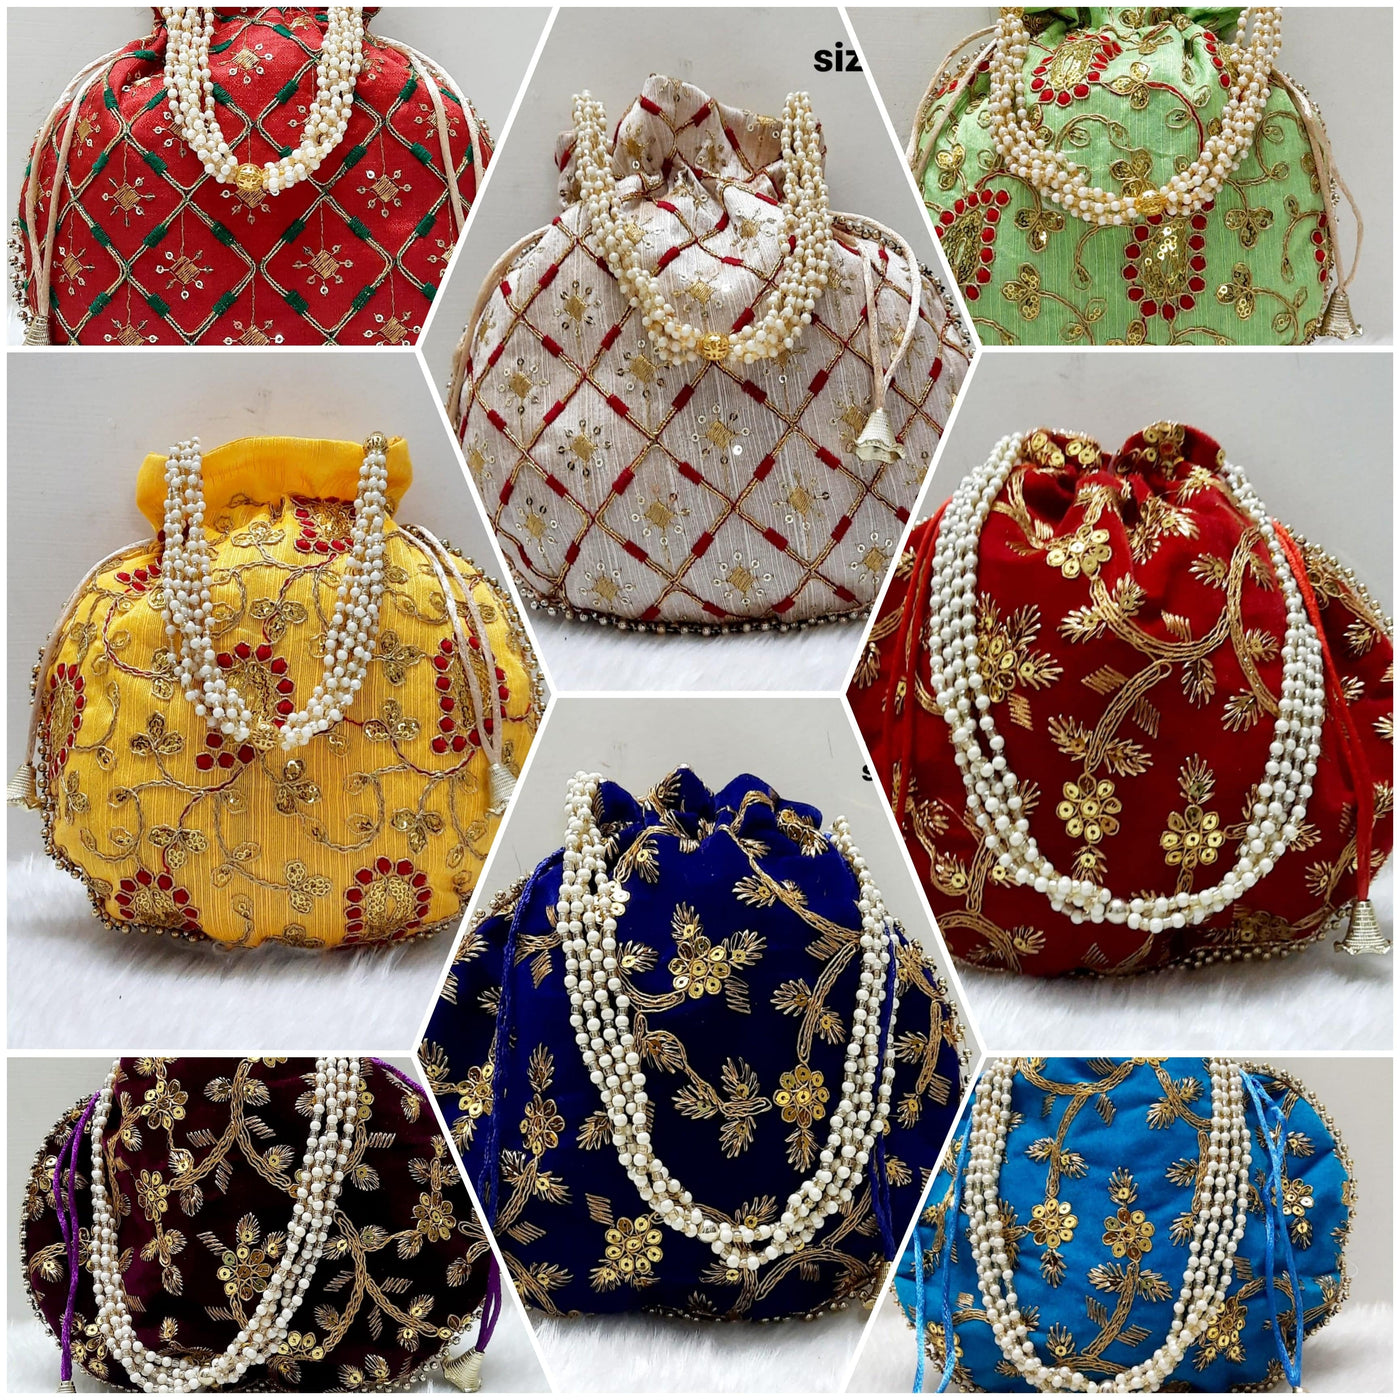 LAMANSH ® Women's Potli Bag Pack of 20 LAMANSH (8*12 inch) Pack of 20 Pcs Potli bags for women handbags traditional Indian Ethnic Embroidery Fashion Potli